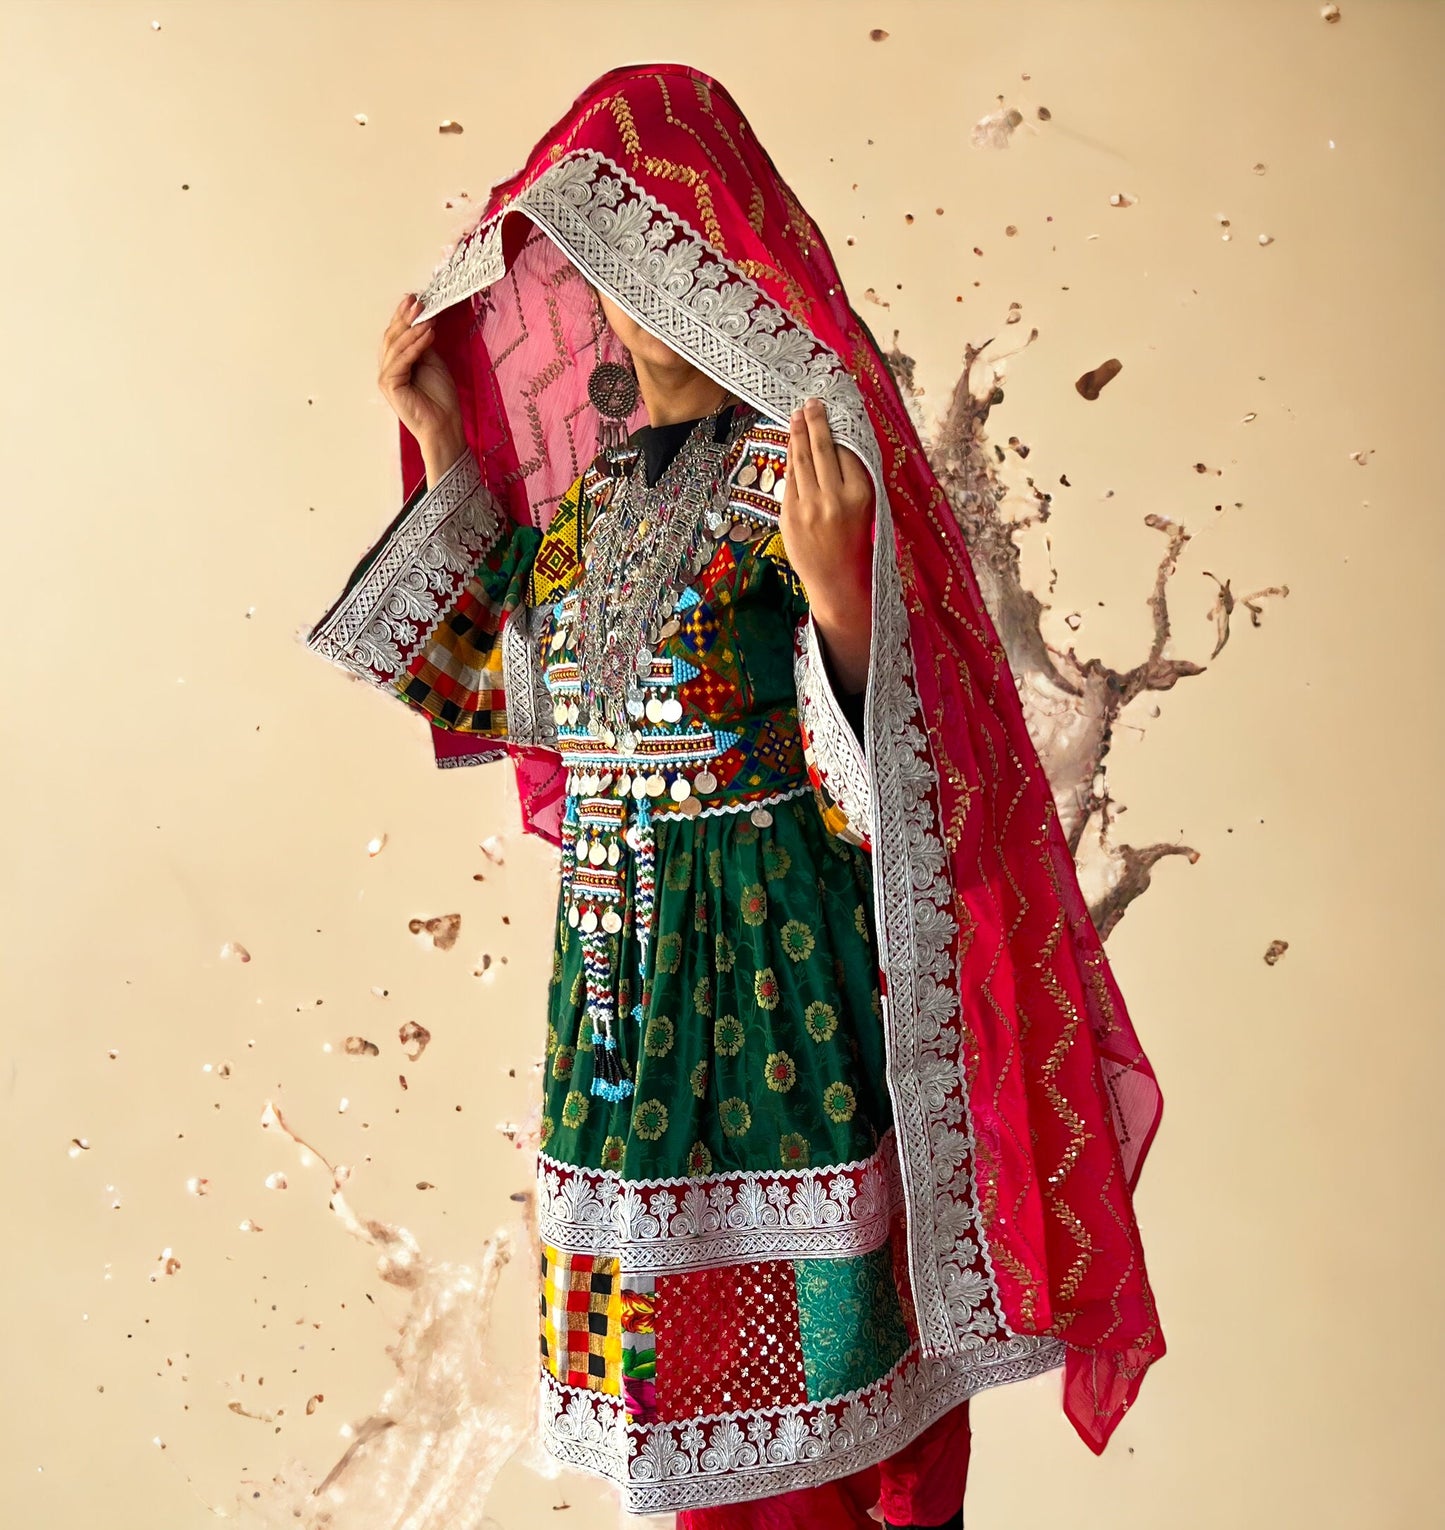 Traditional kochi style afghani dress, bridal nikkah dress, kochi dress for bride